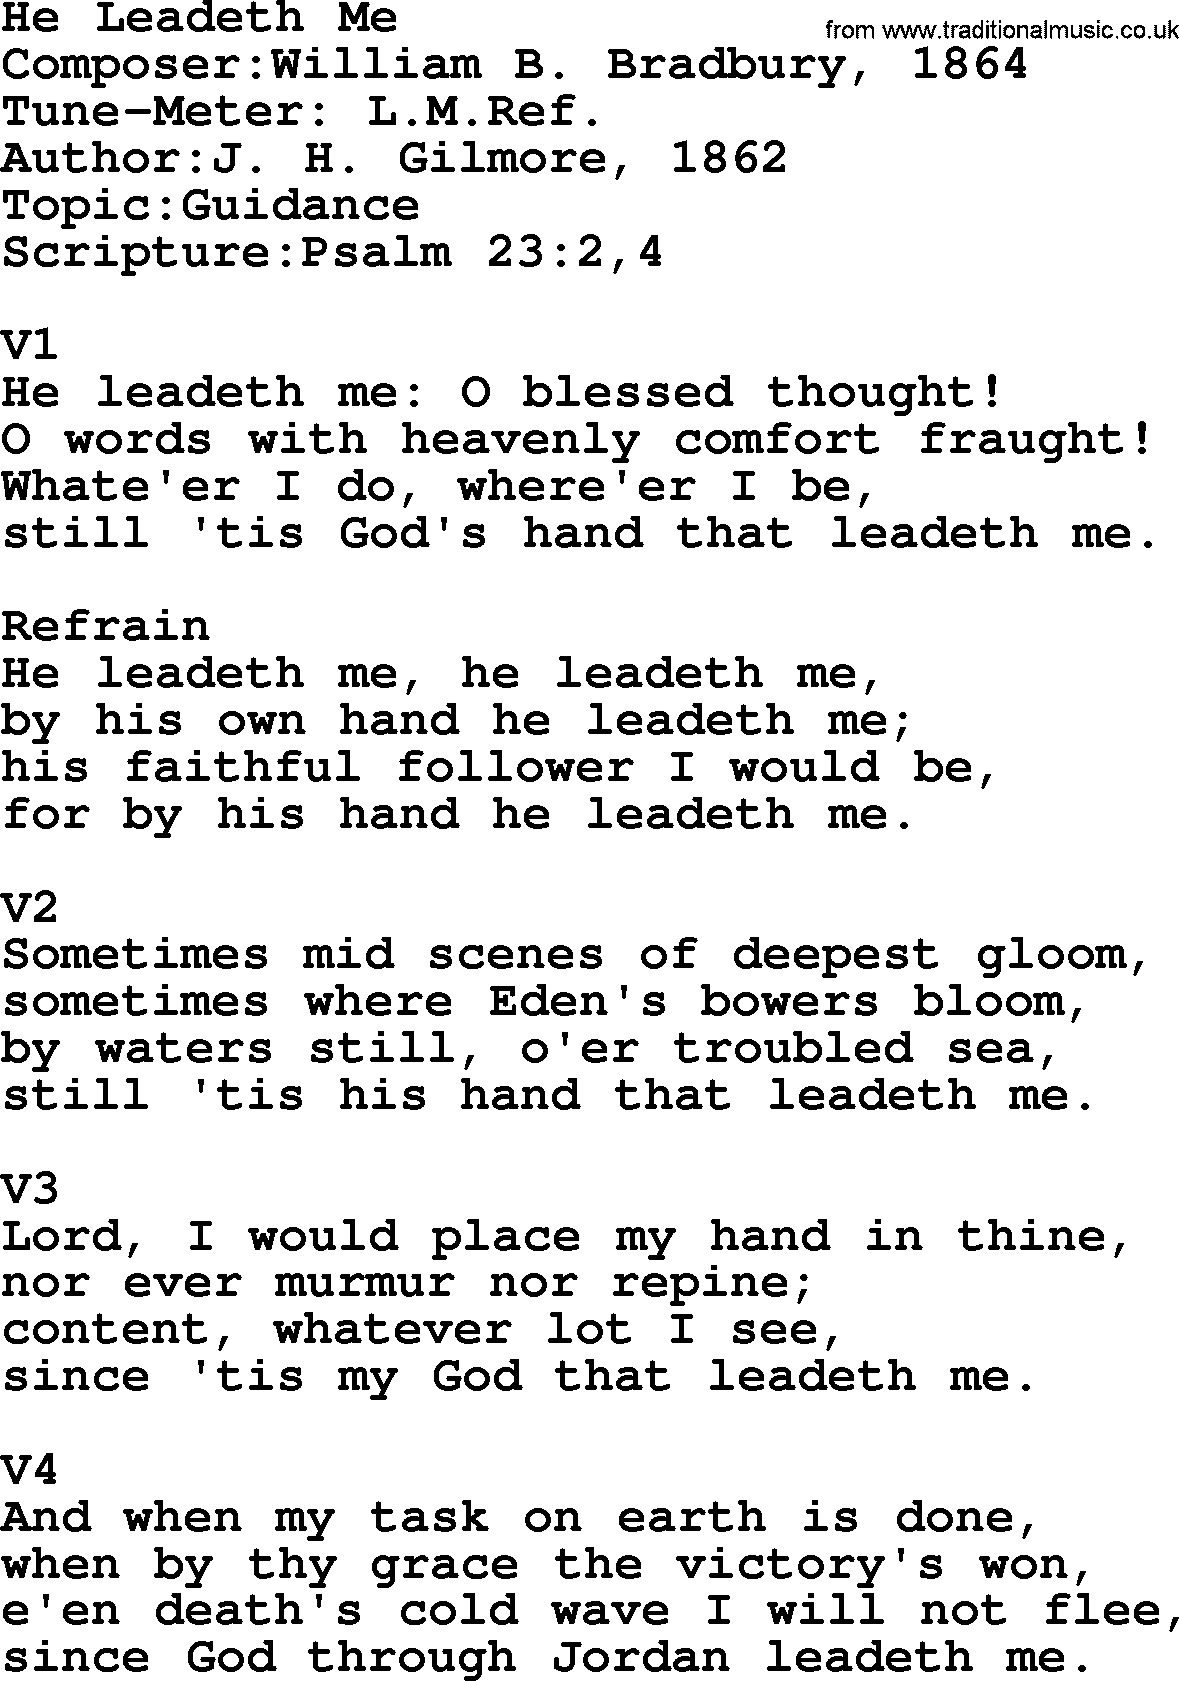 Adventist Hynms collection, Hymn: He Leadeth Me, lyrics with PDF